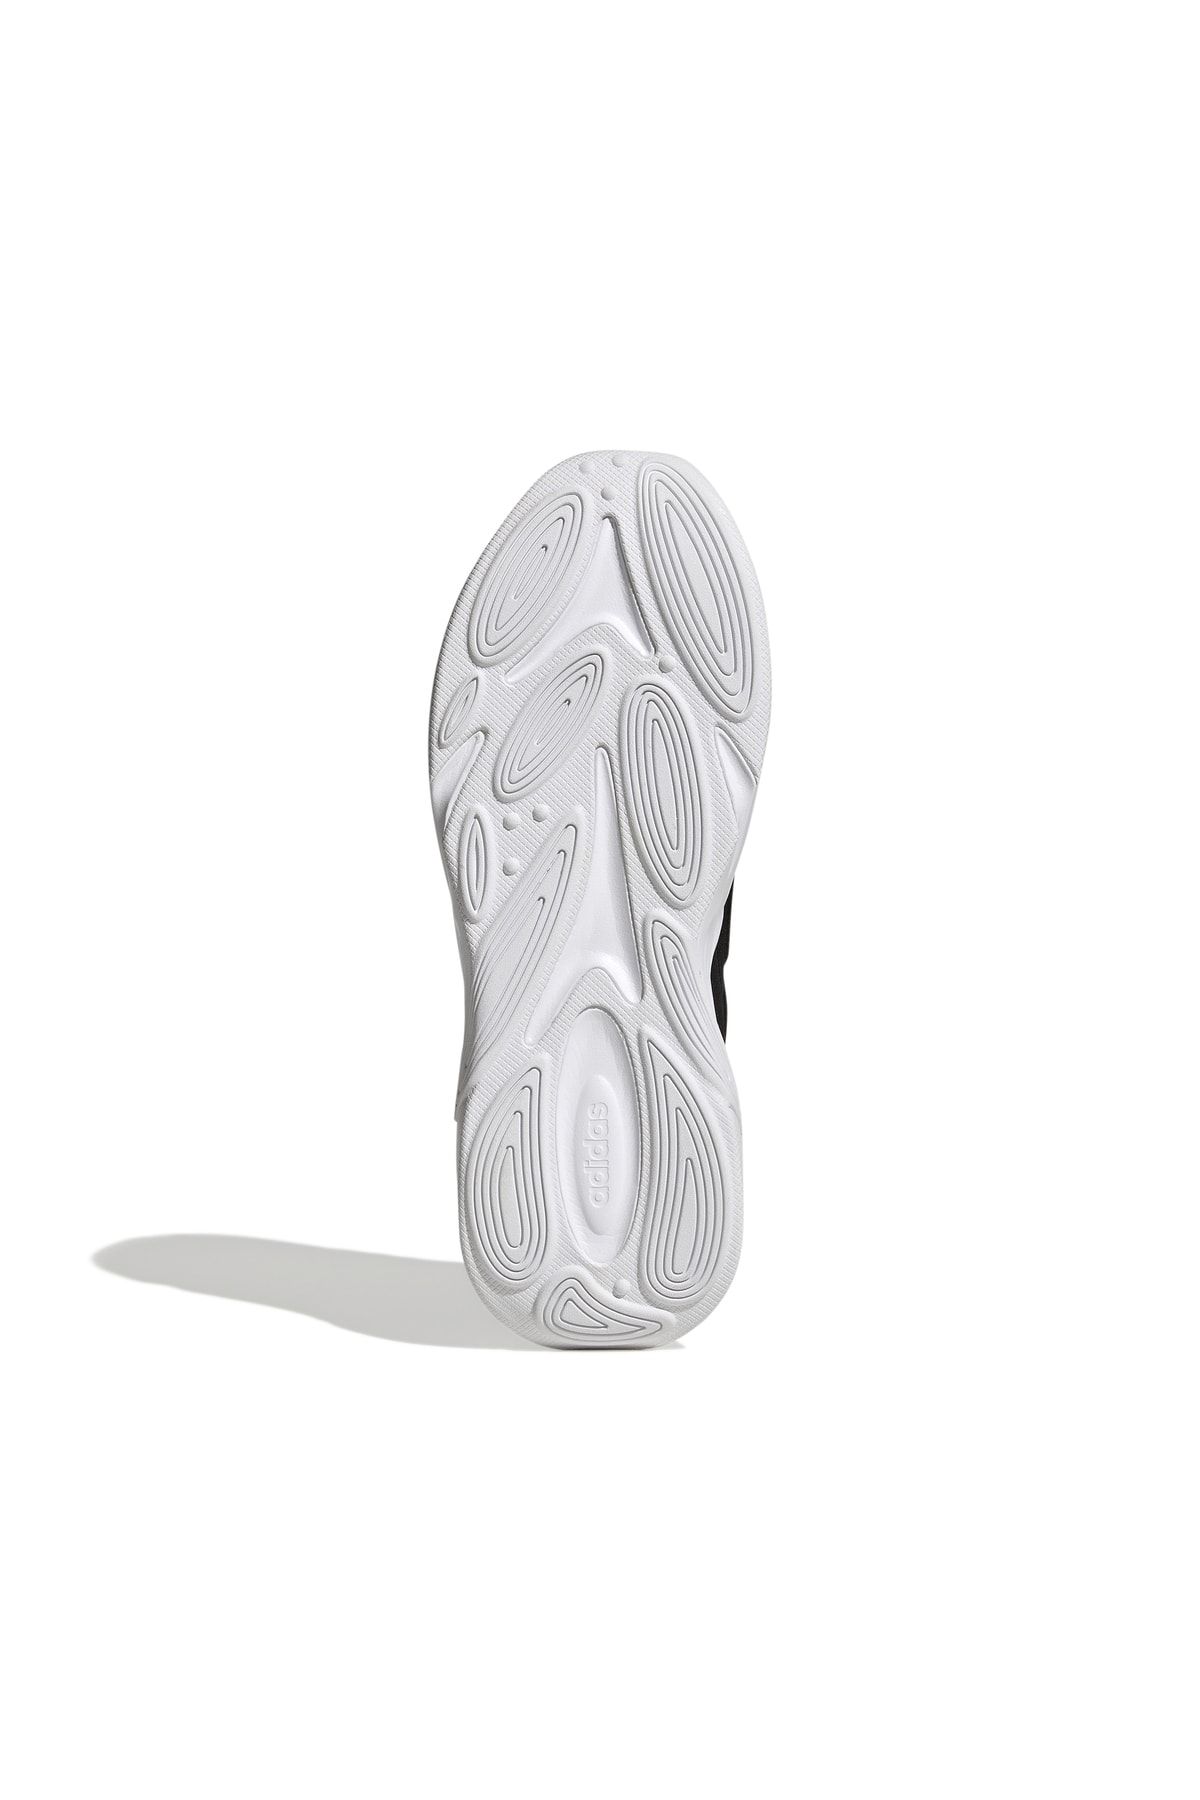 کفش كتانى ورزشى مدل Ozelle Cloudfoam مردانه آدیداس Adidas